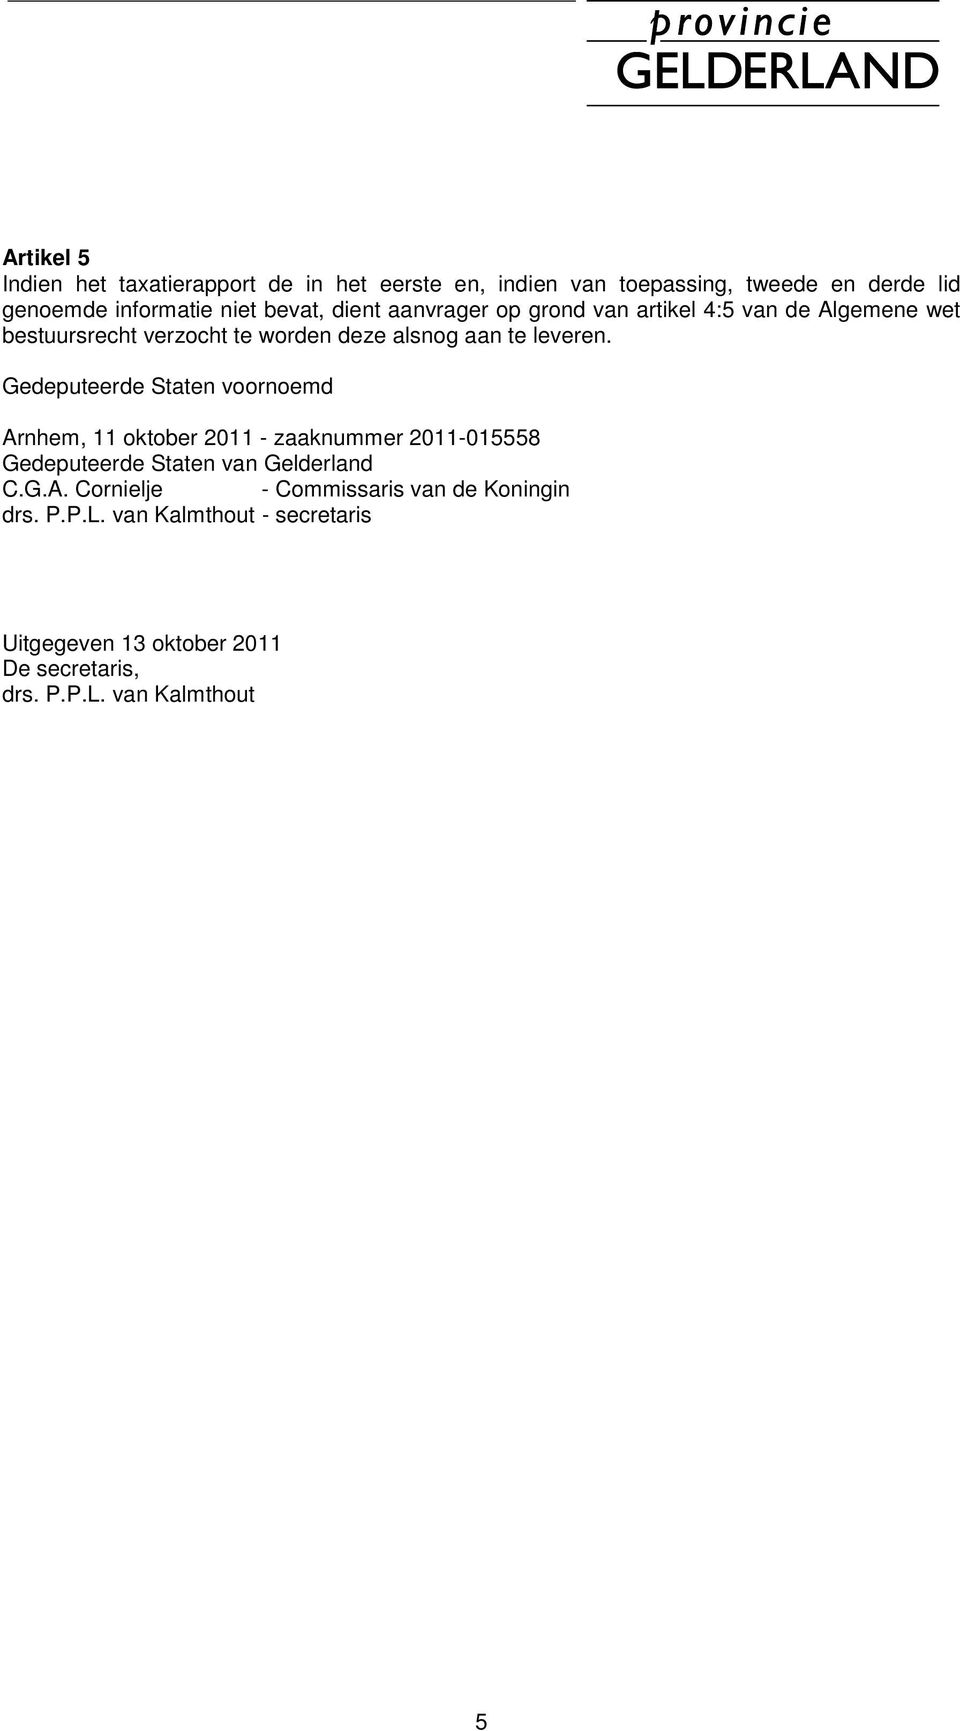 Gedeputeerde Staten voornoemd Arnhem, 11 oktober 2011 - zaaknummer 2011-015558 Gedeputeerde Staten van Gelderland C.G.A. Cornielje - Commissaris van de Koningin drs.